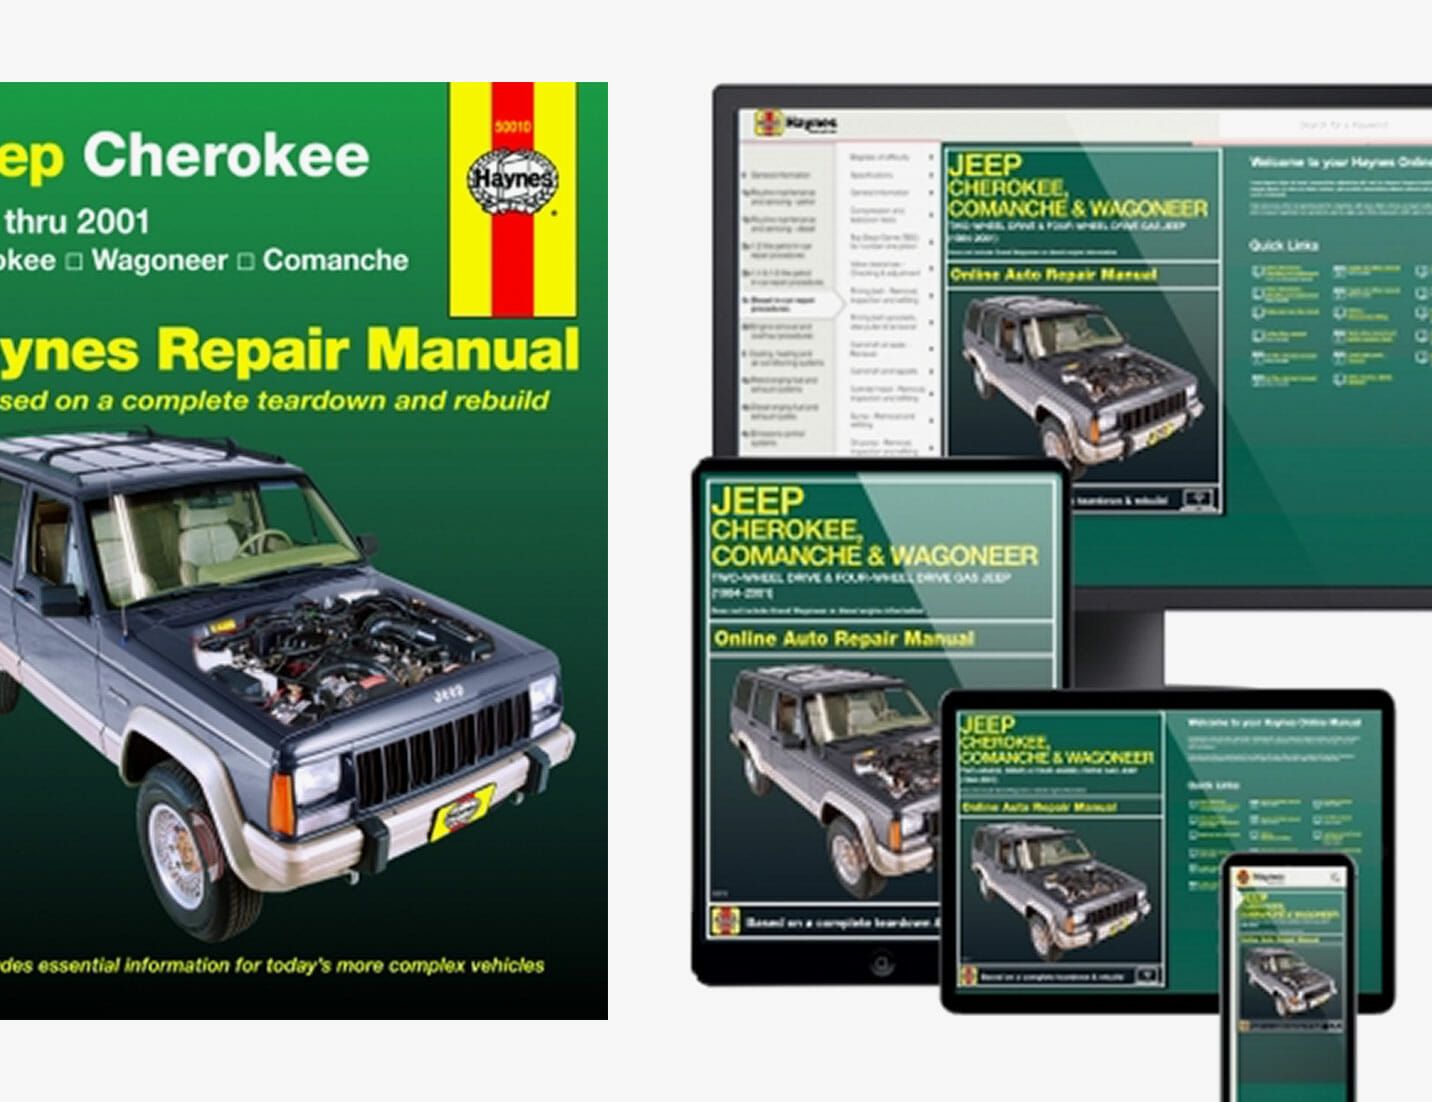 Haynes Automotive Manuals Are 50% Off Right Now • Gear Patrol